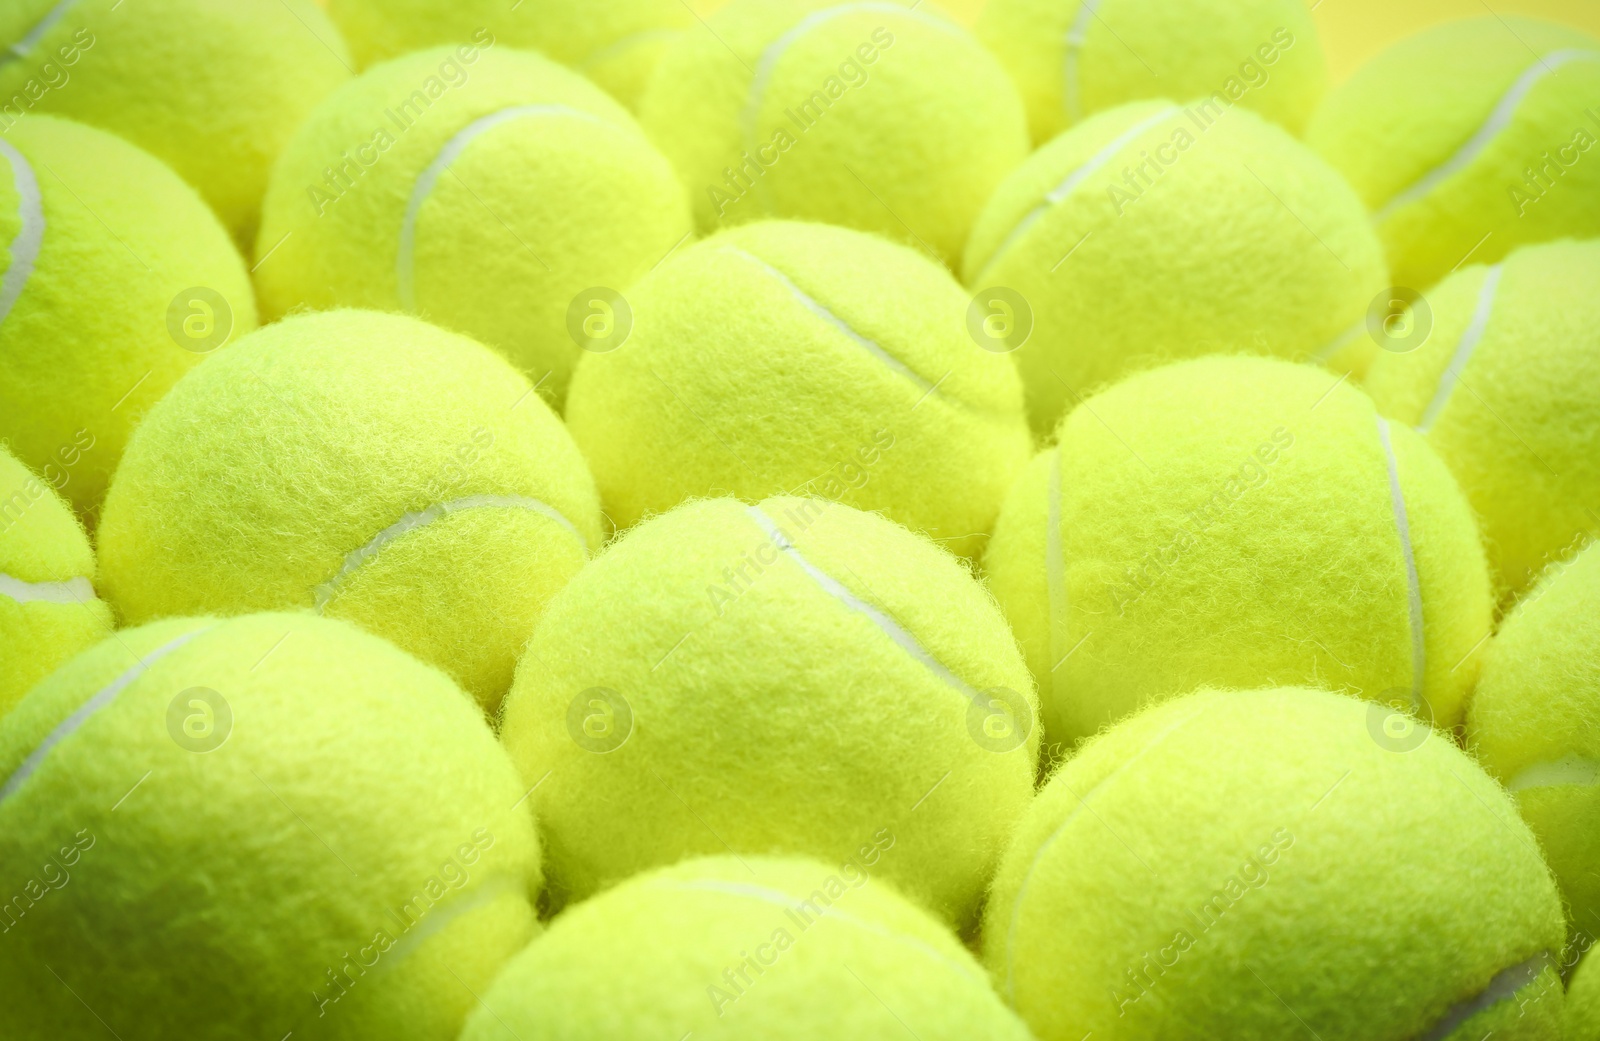 Photo of Tennis balls as background, closeup. Sports equipment